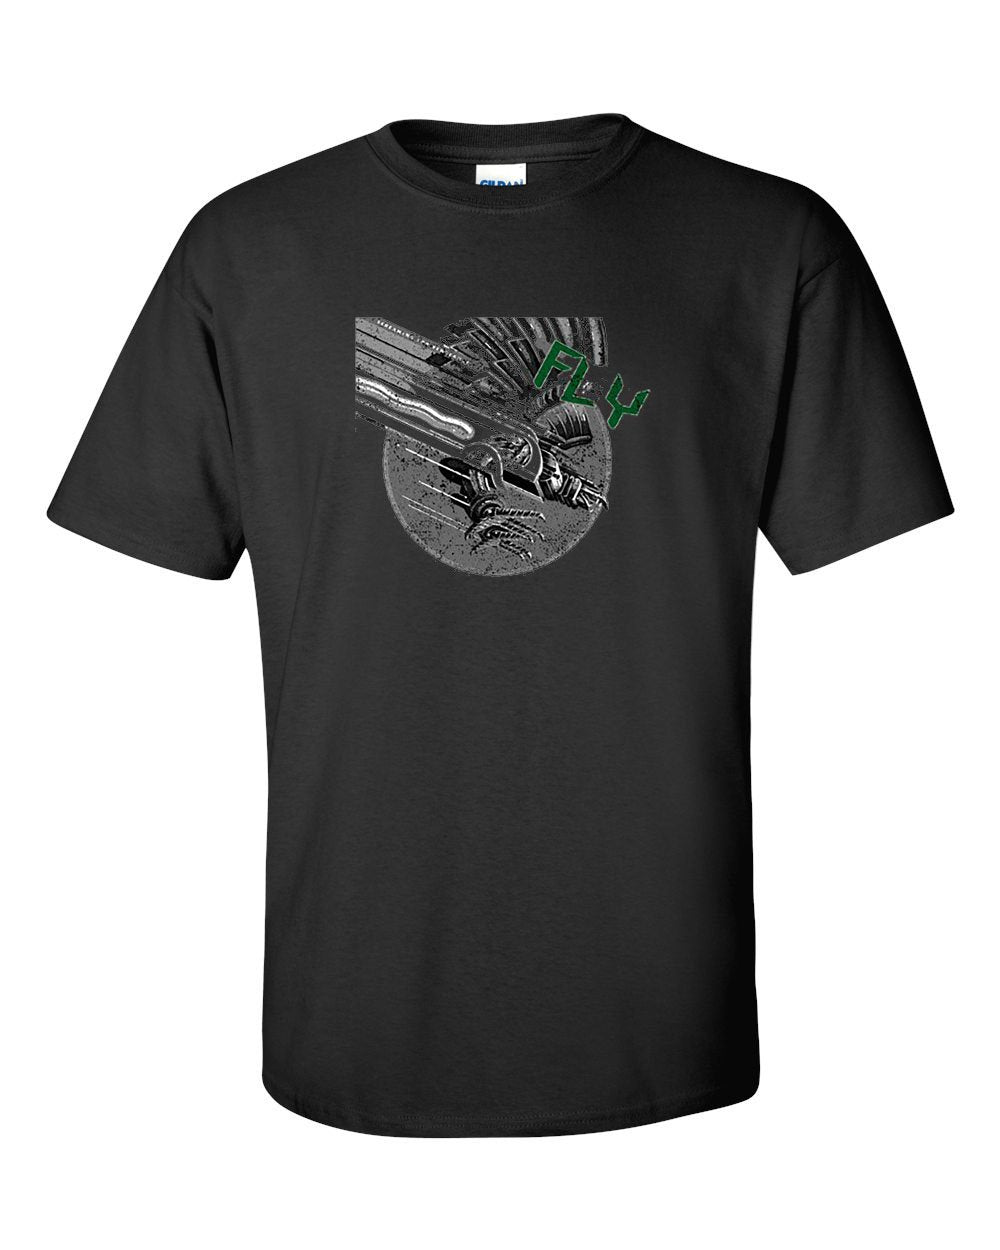 Judas Bird Mens/Unisex T-Shirt